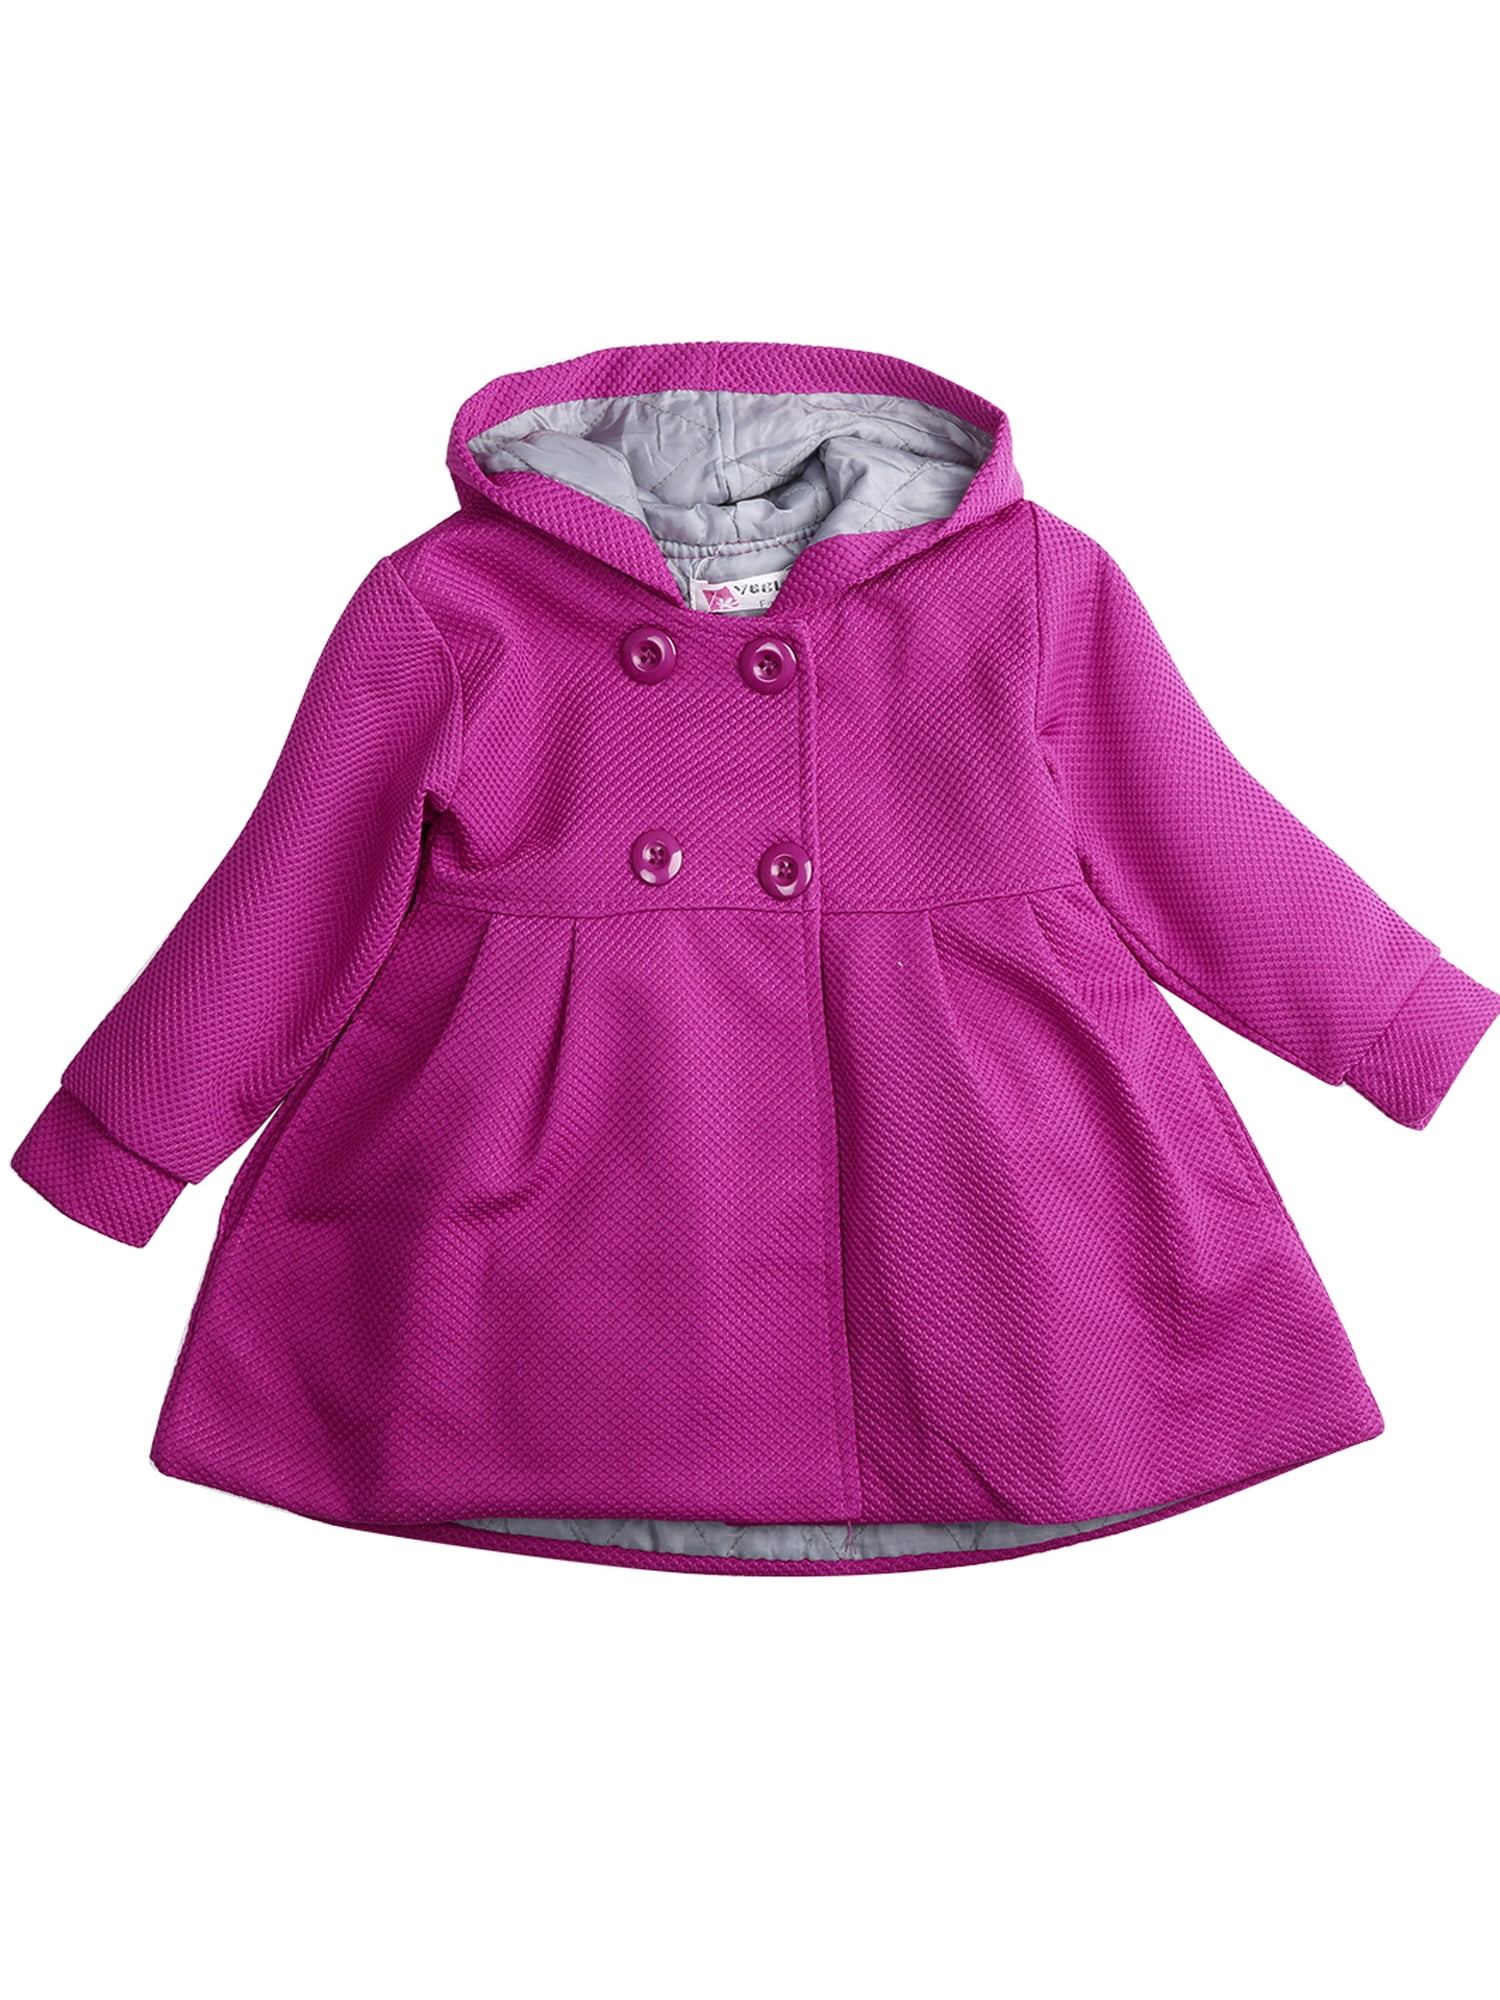 Newborn Infant Girls Autumn Outwear Outdoor Coat Hooded Cardigan Button Jacket 